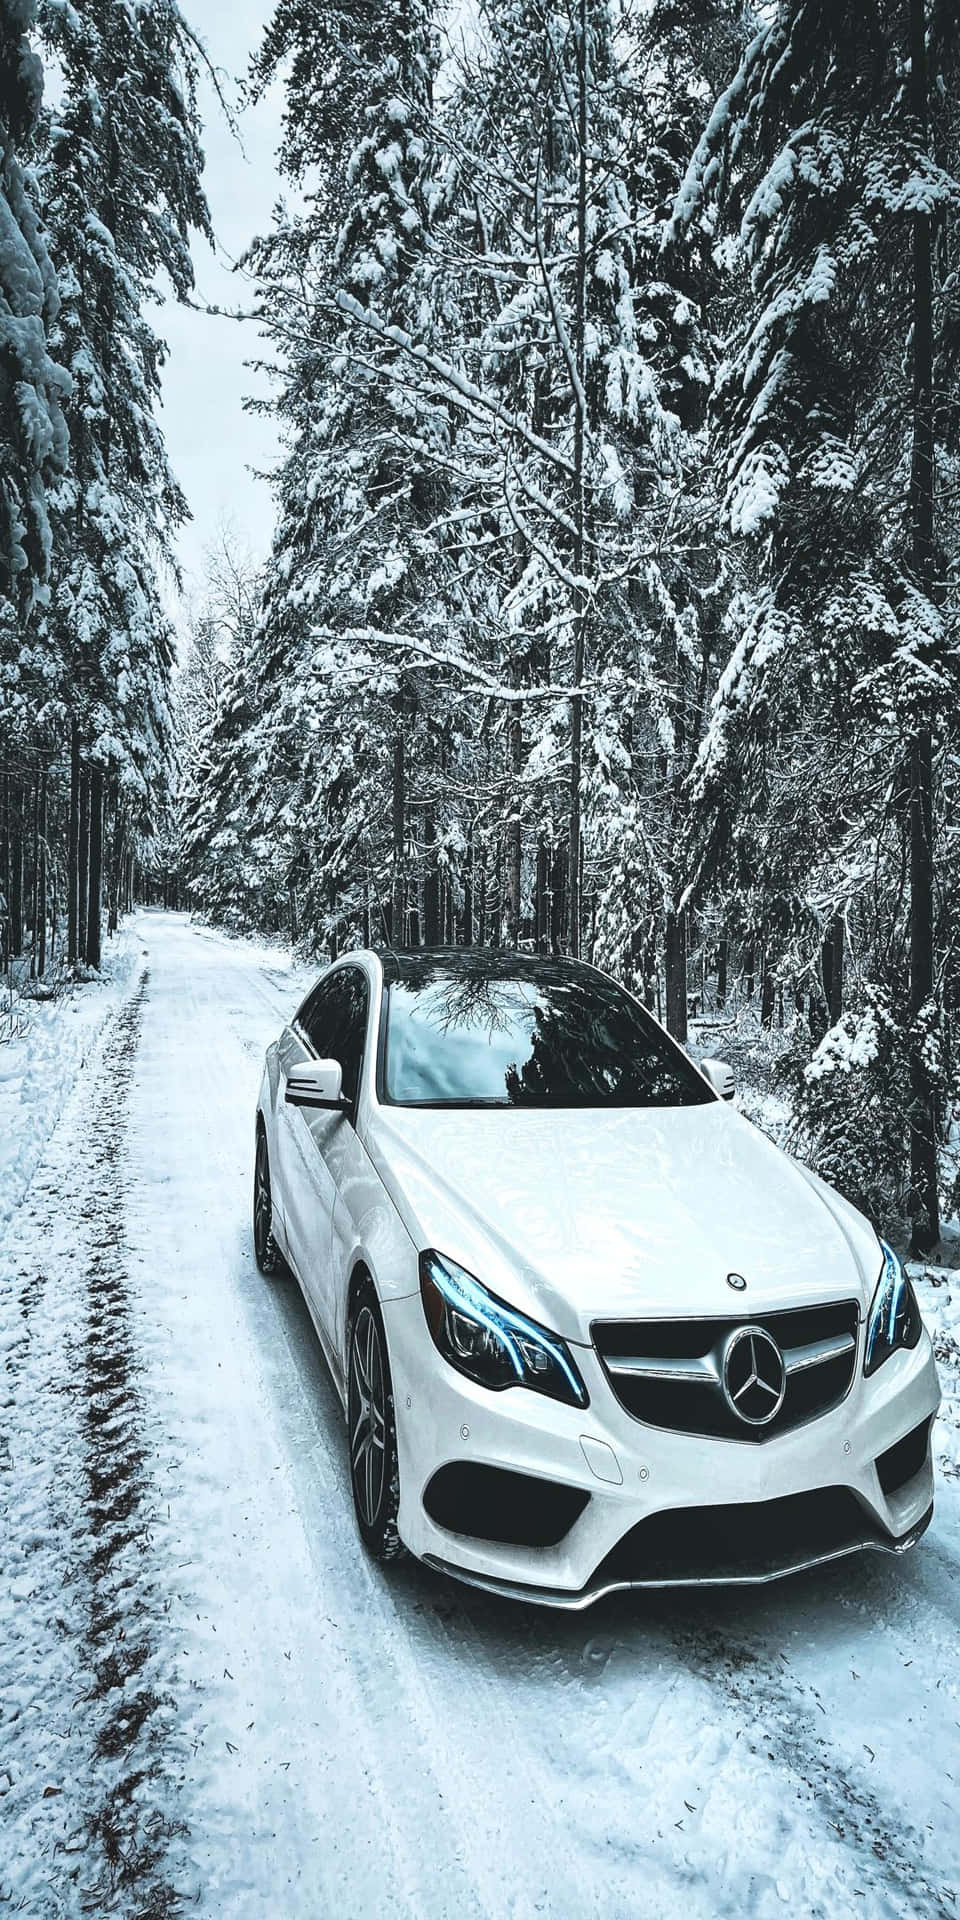 Pixel 3 Mercedes Amg Background